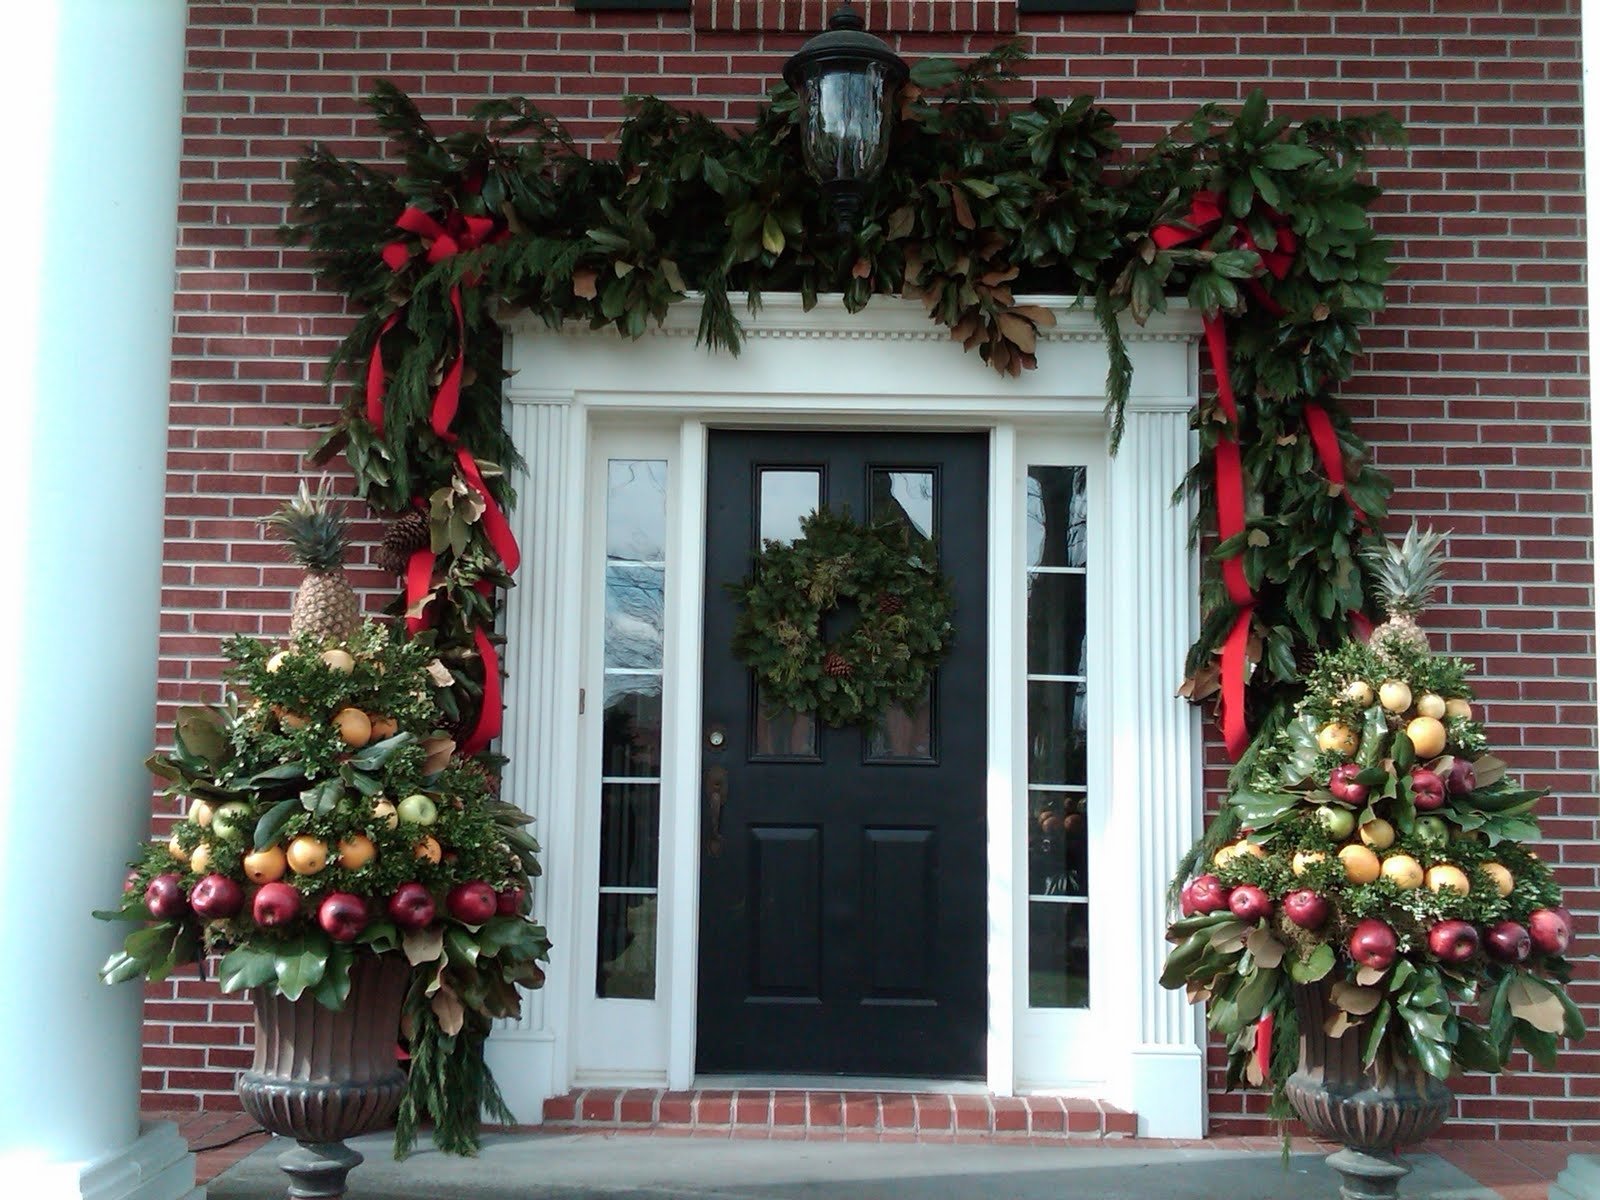 10 Spectacular Front Door Christmas Decorations Ideas christmas decorating your front door decorations ideas decor festive 1 2023